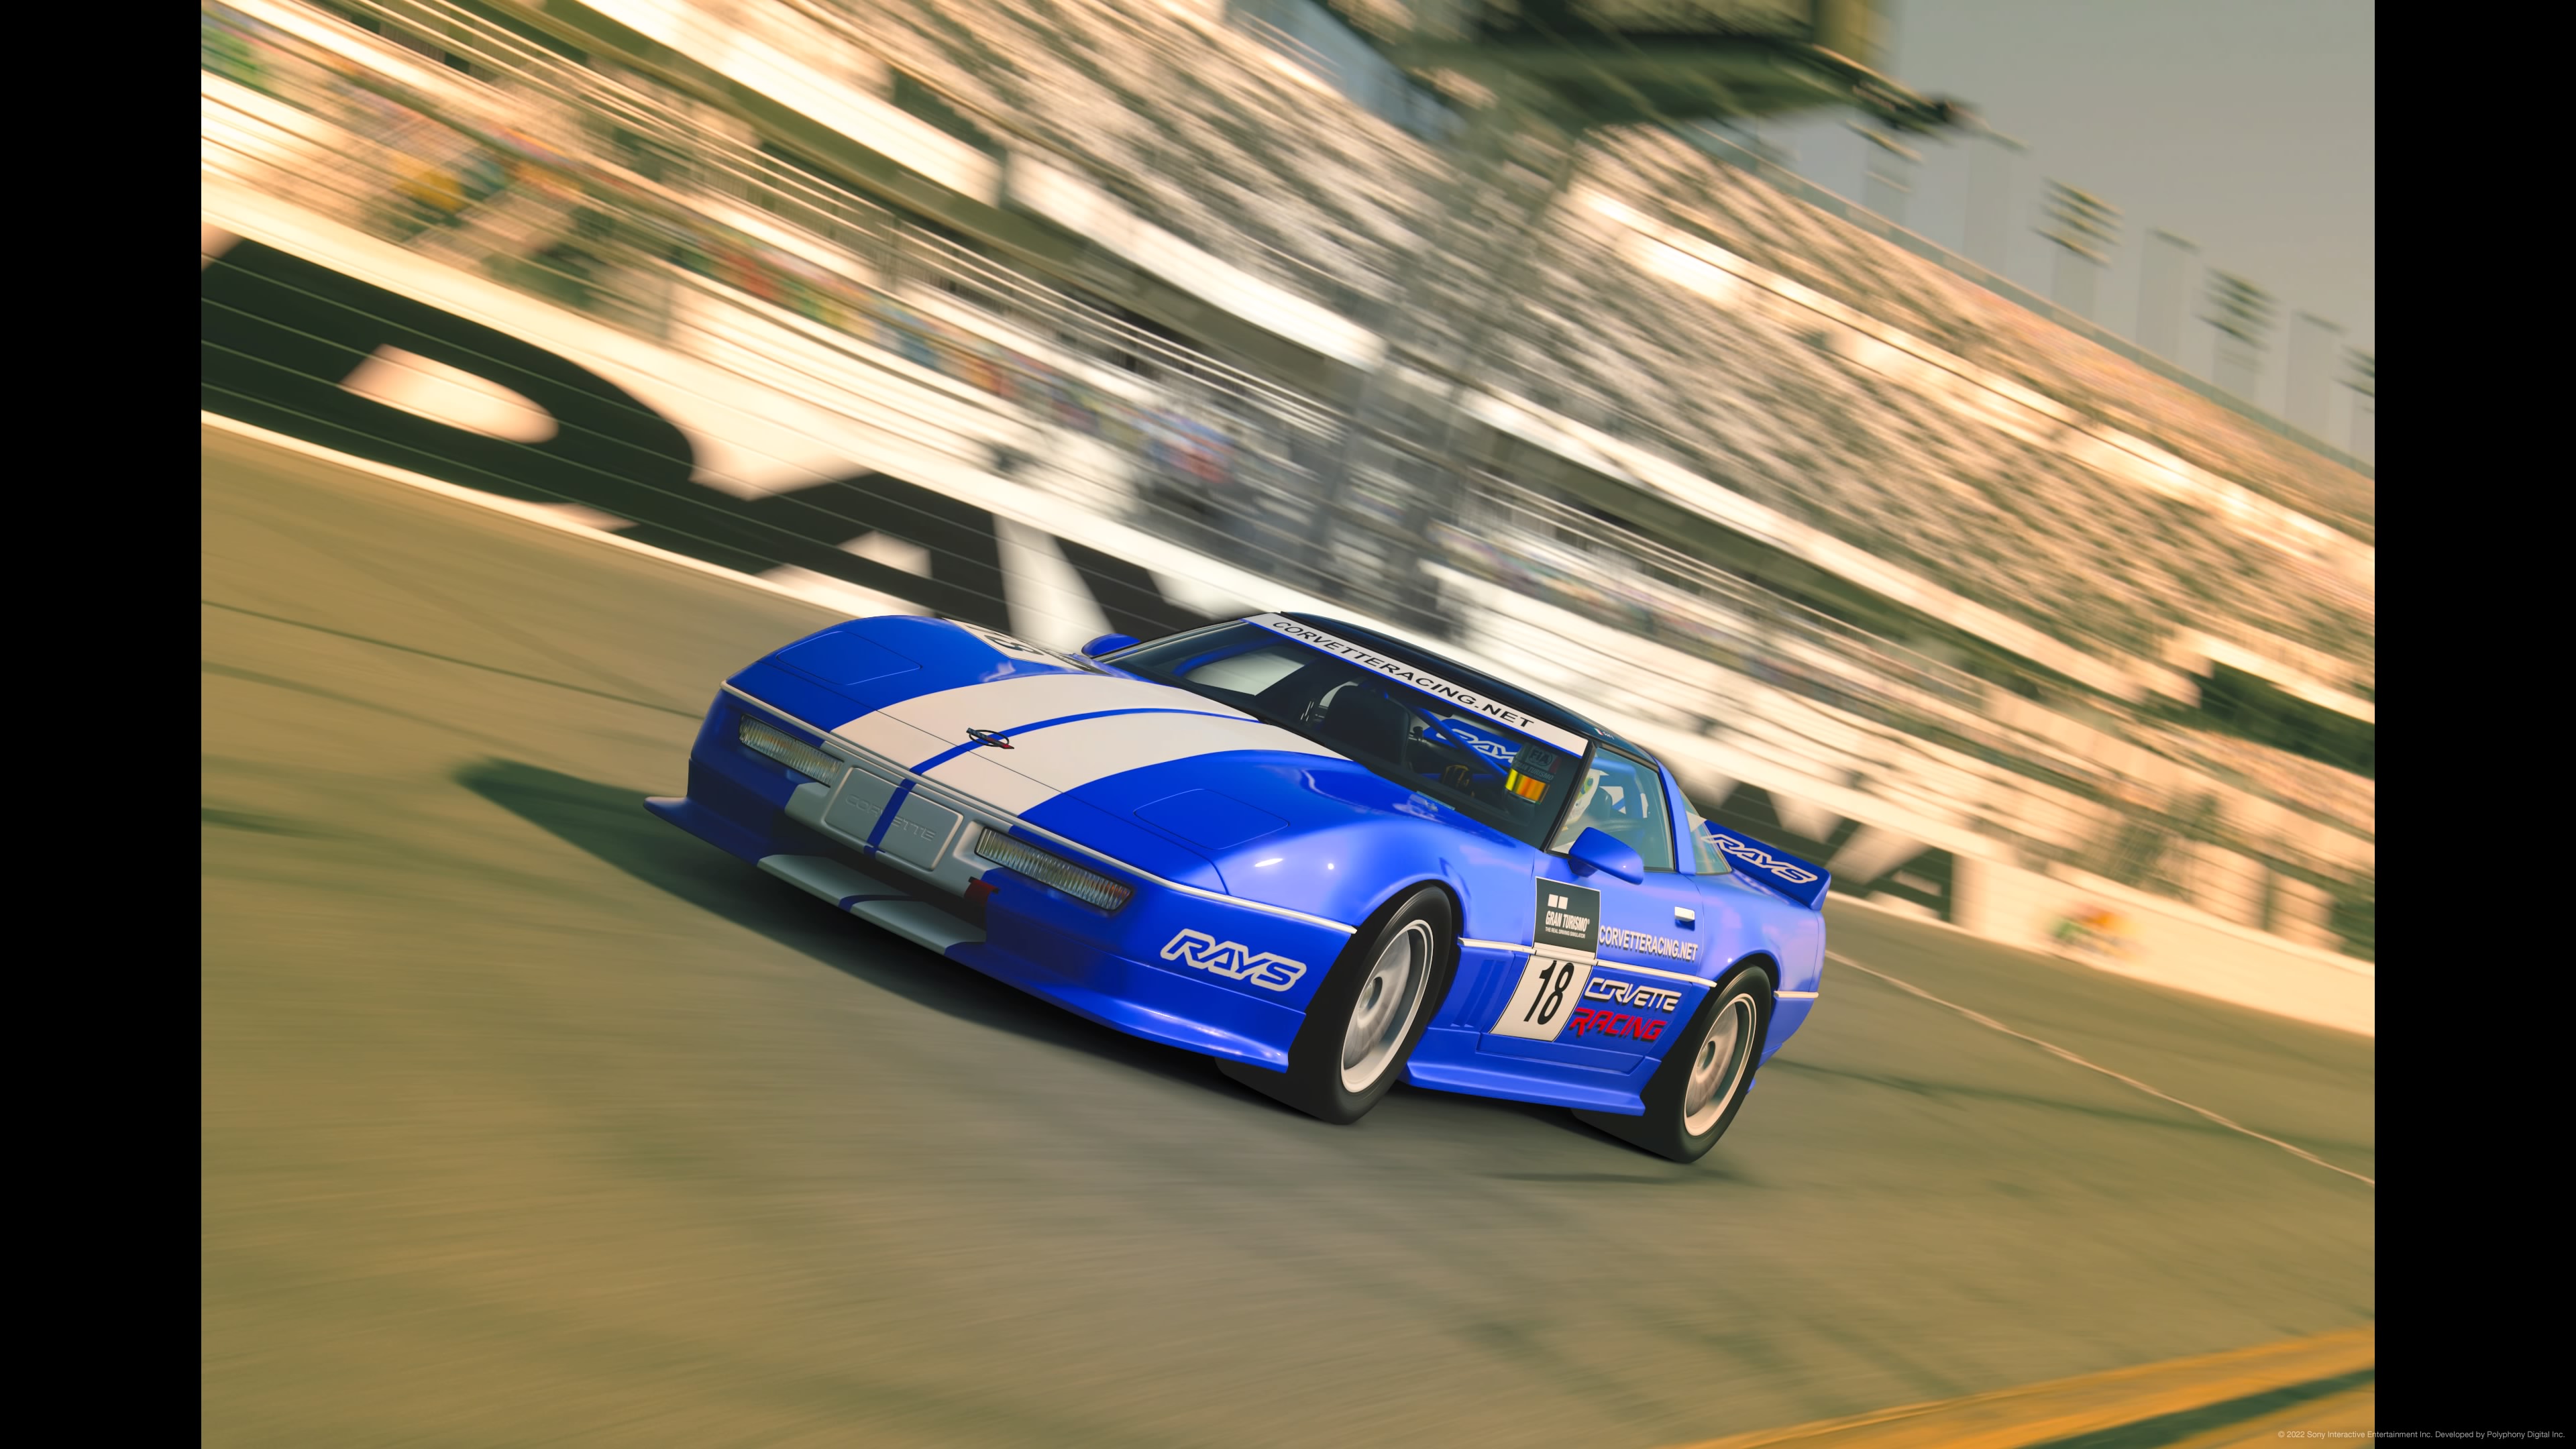 General 3840x2160 car race cars daytona Corvette photo manipulation Gran Turismo Gran Turismo Sport Playstation 5 race tracks racing stripes blue cars white blue Chevrolet CGI Gran Turismo 7